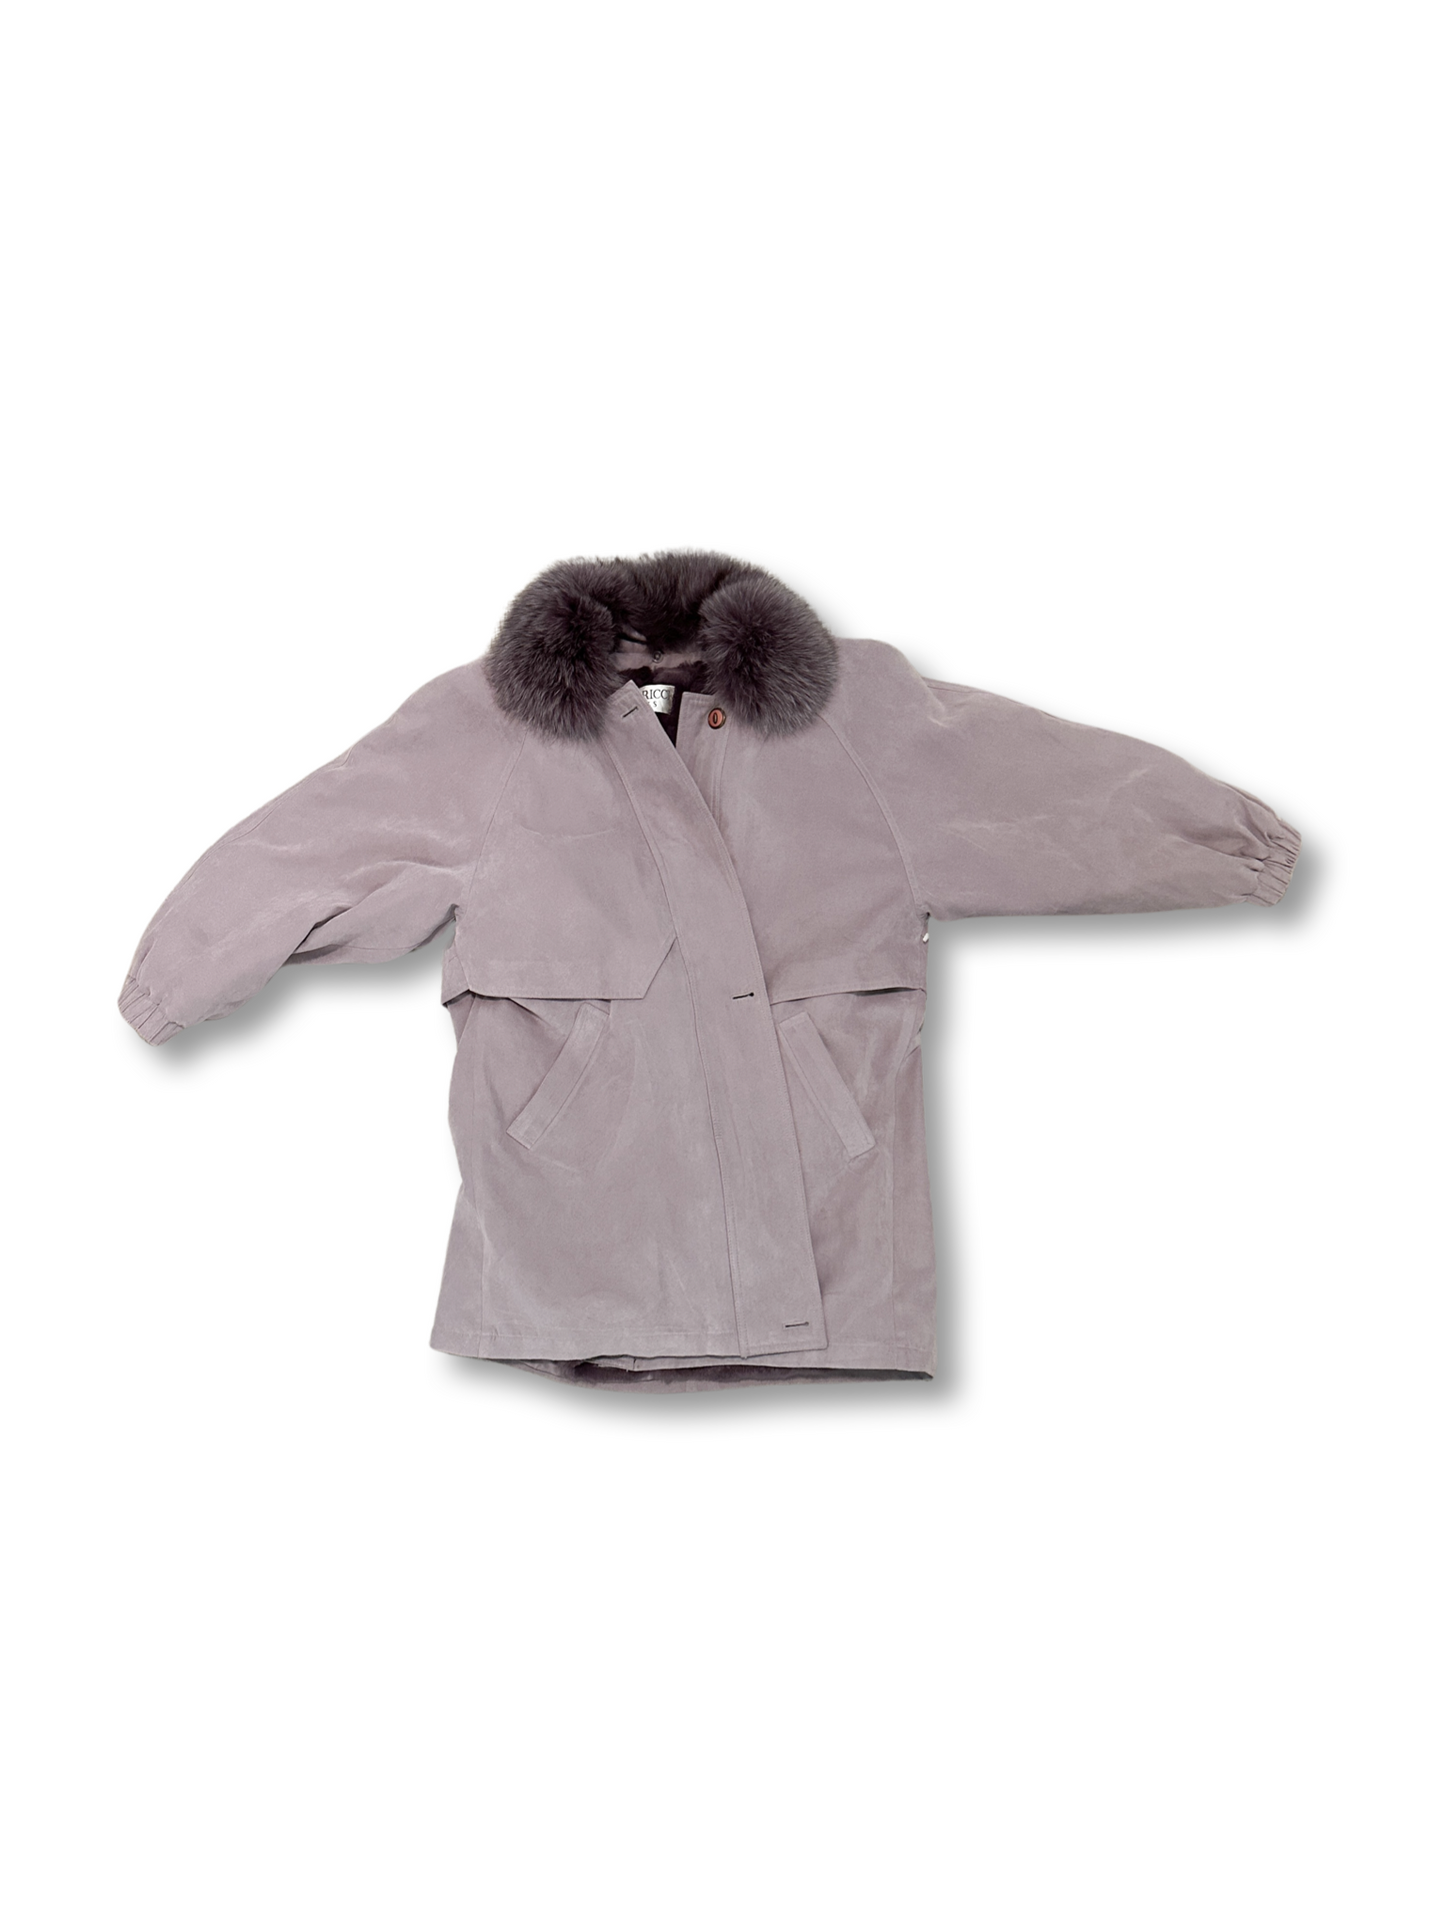 Nina Ricci Coat with Fur Collar and Lining | Lined Mid Length Coat | Warm Designer Coat